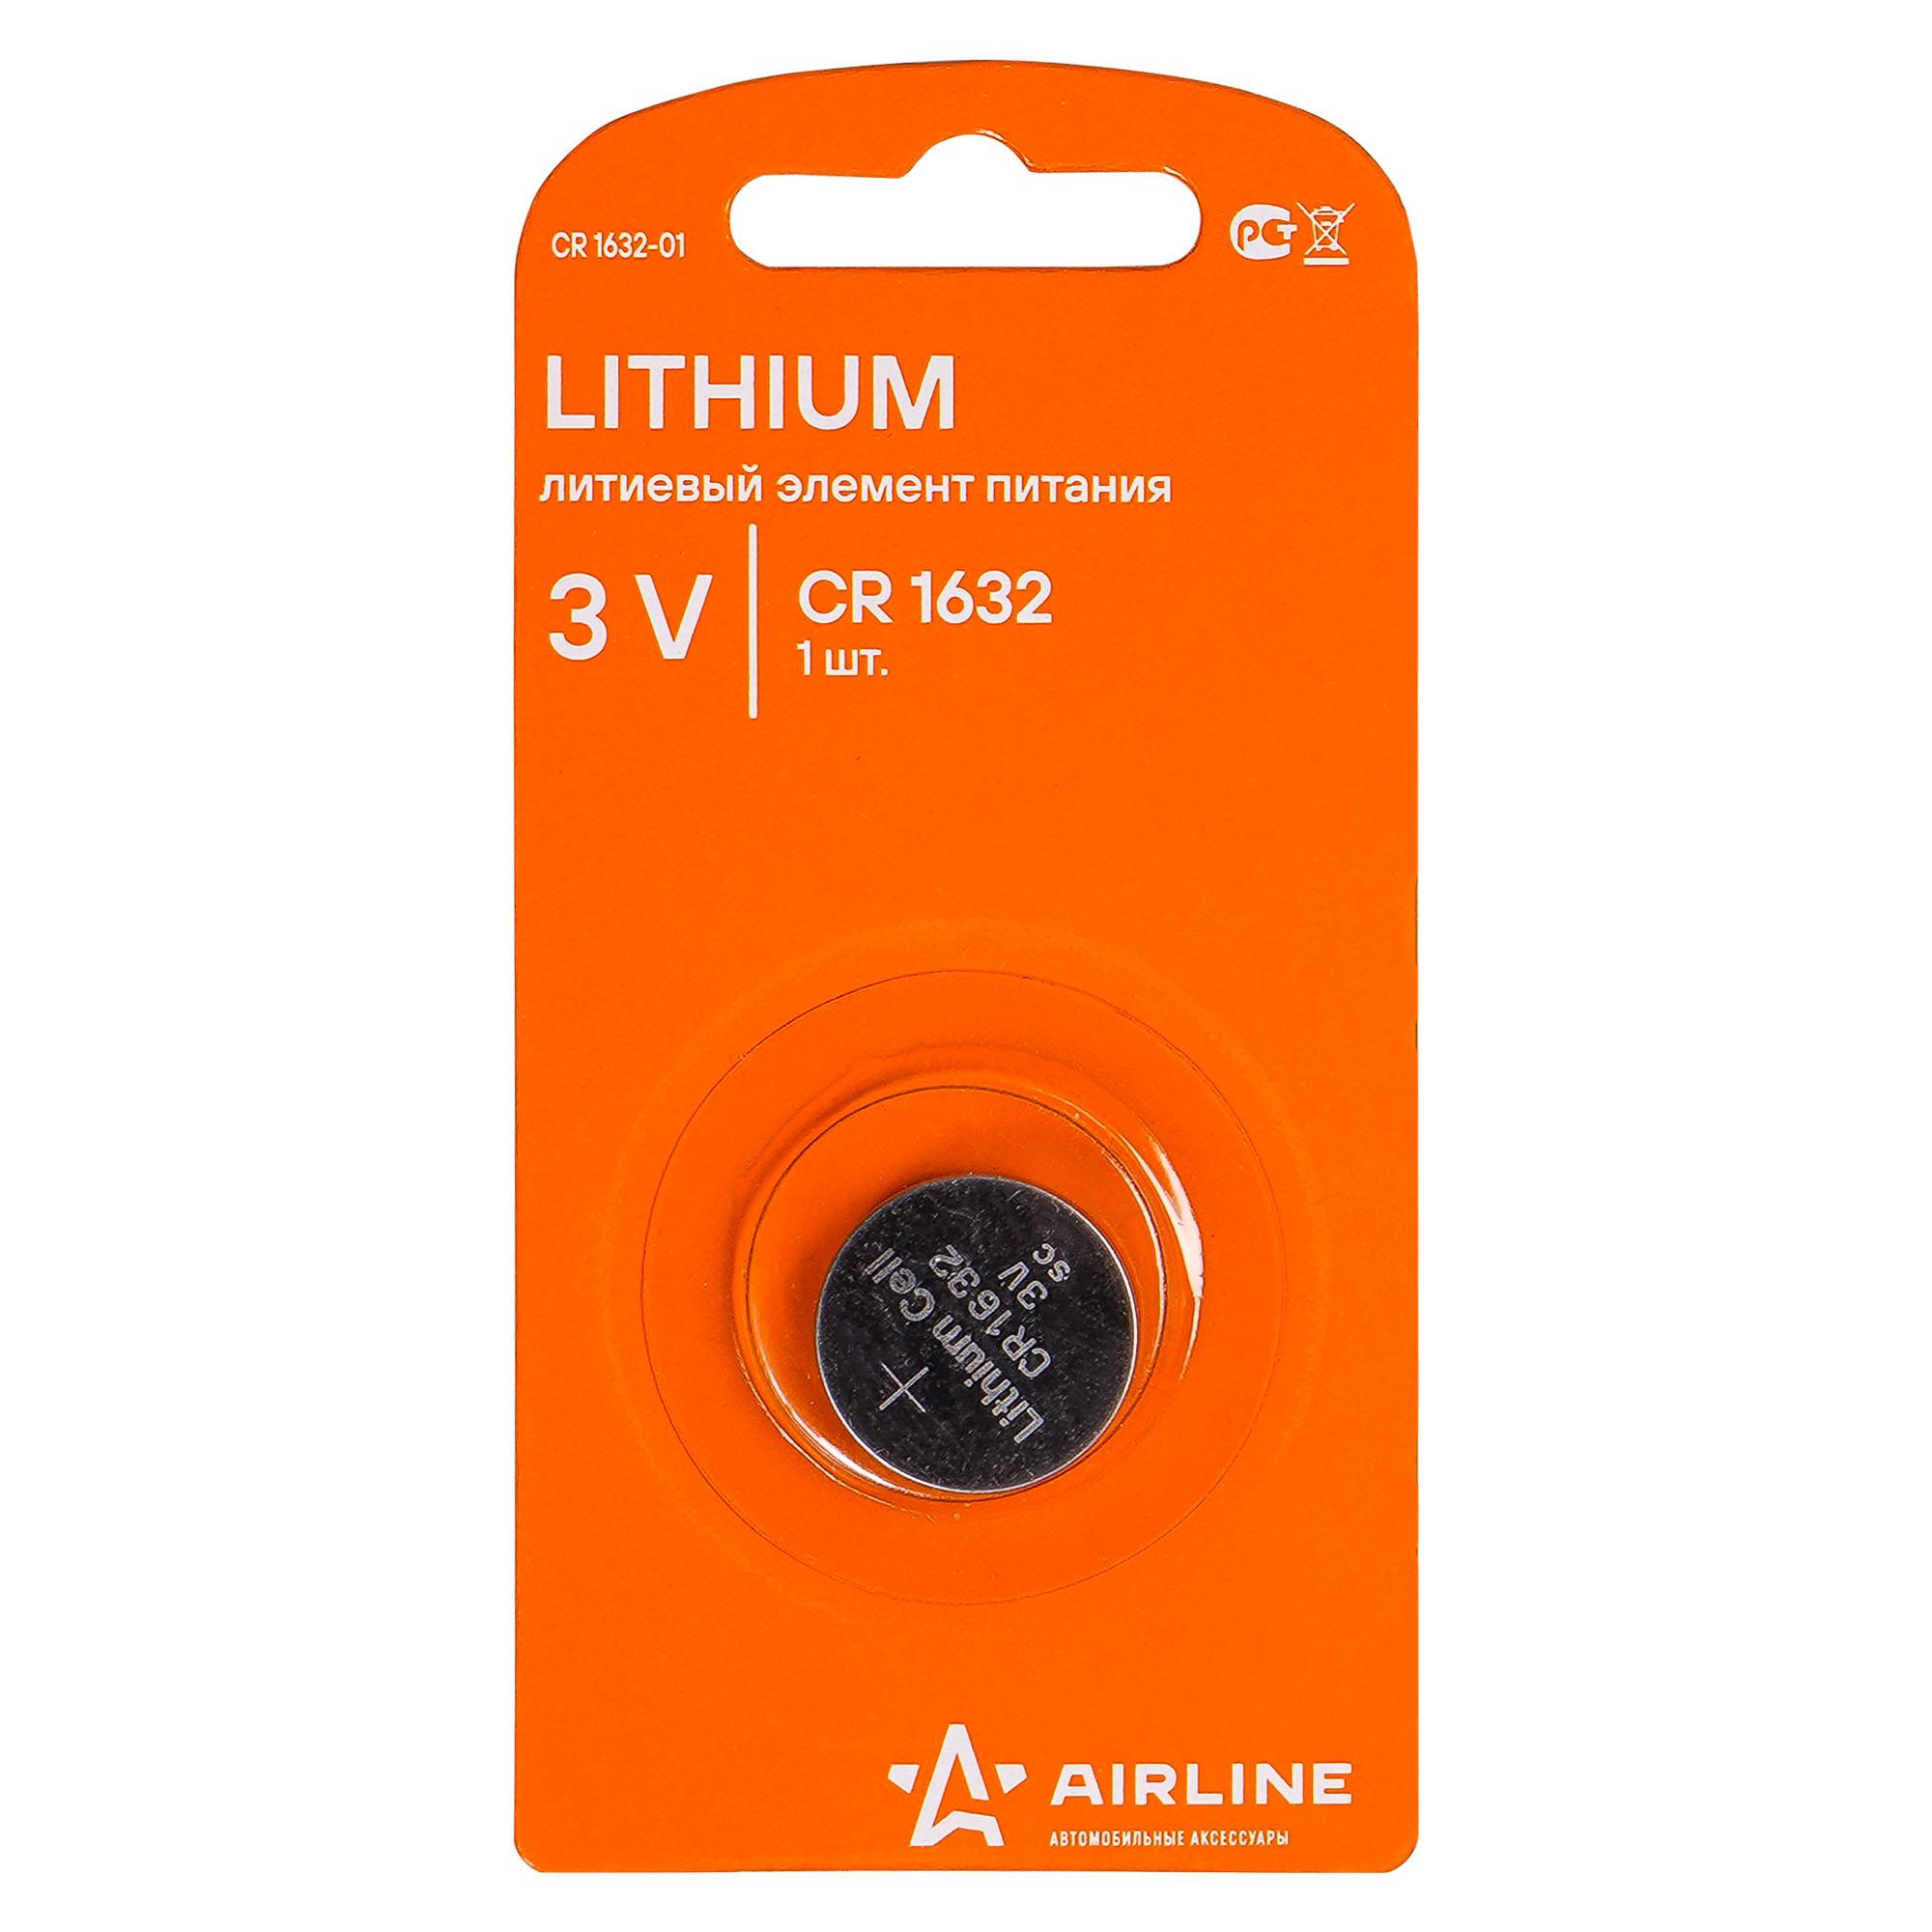 Батарейка CR1632 3V для брелоков сигнализаций литиевая 1 шт. - AIRLINE CR1632-01